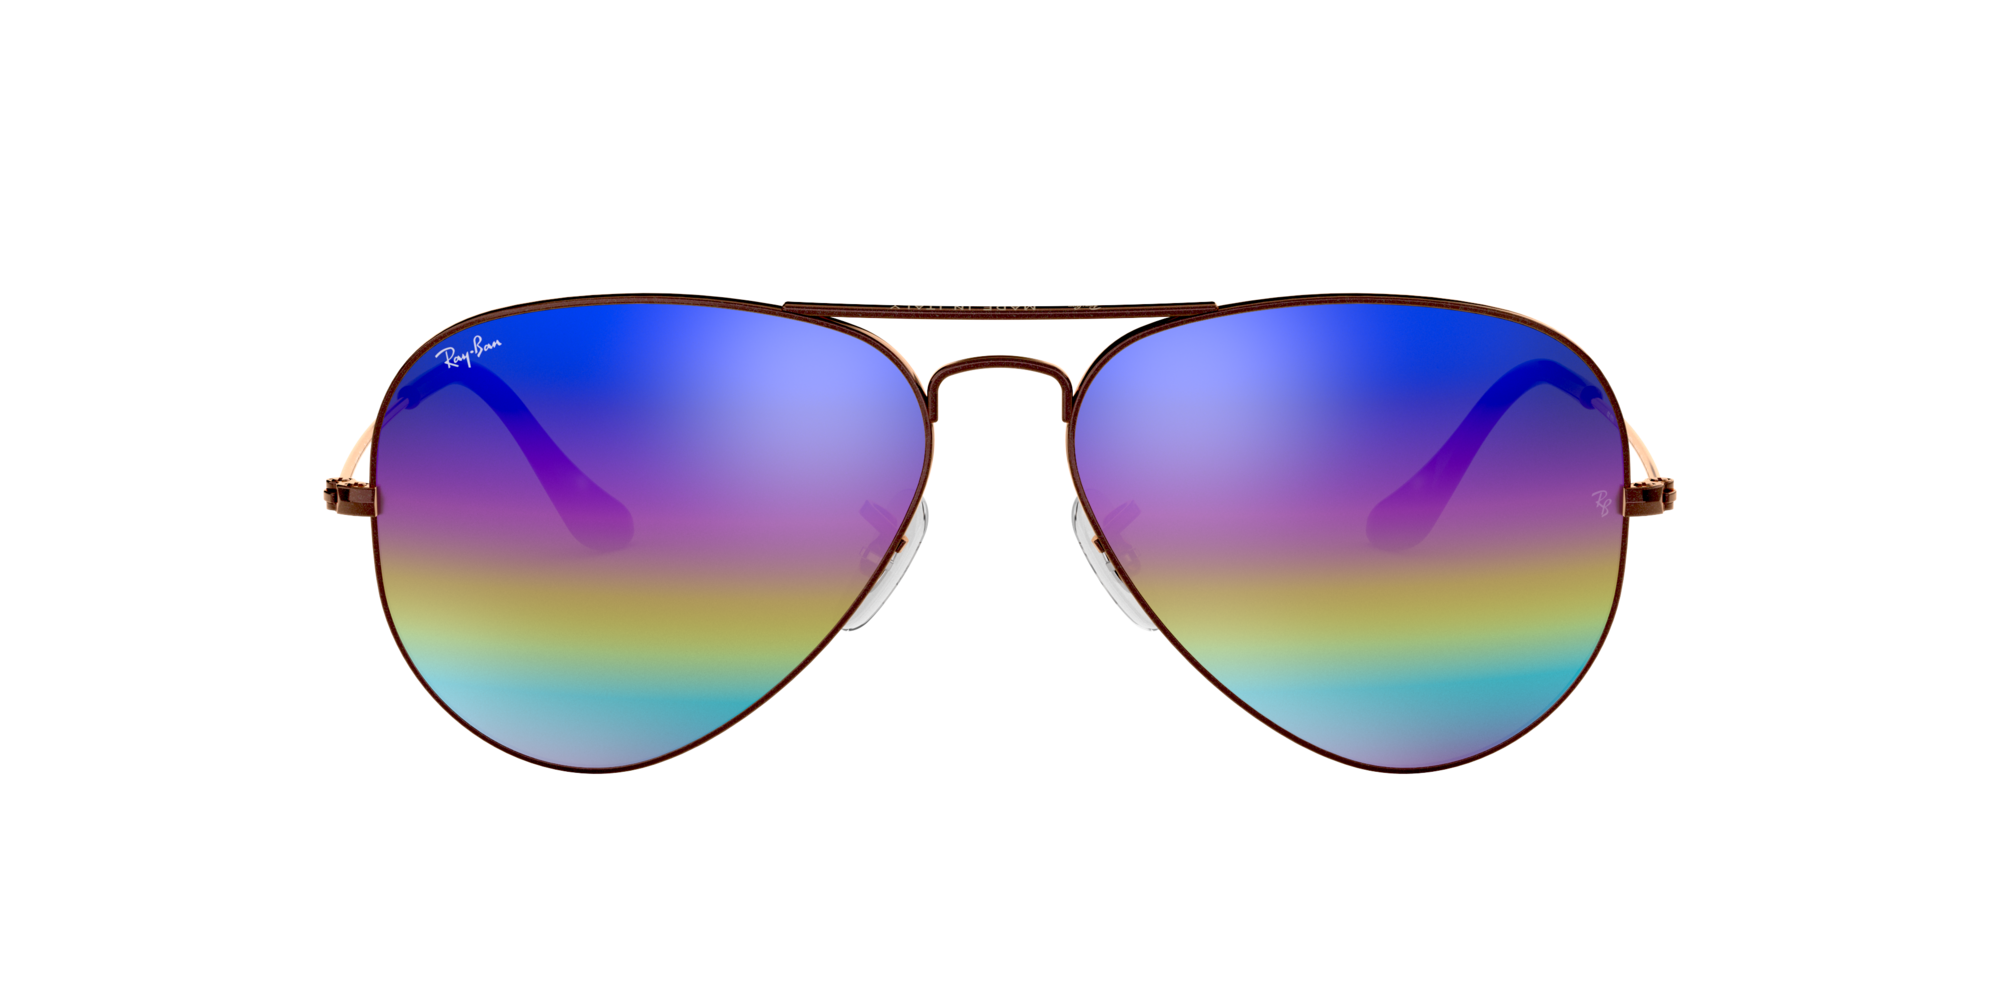 Mens Womens Aviators Full Mirror Rainbow Lens Sunglasses 4 Designs 2 choose from